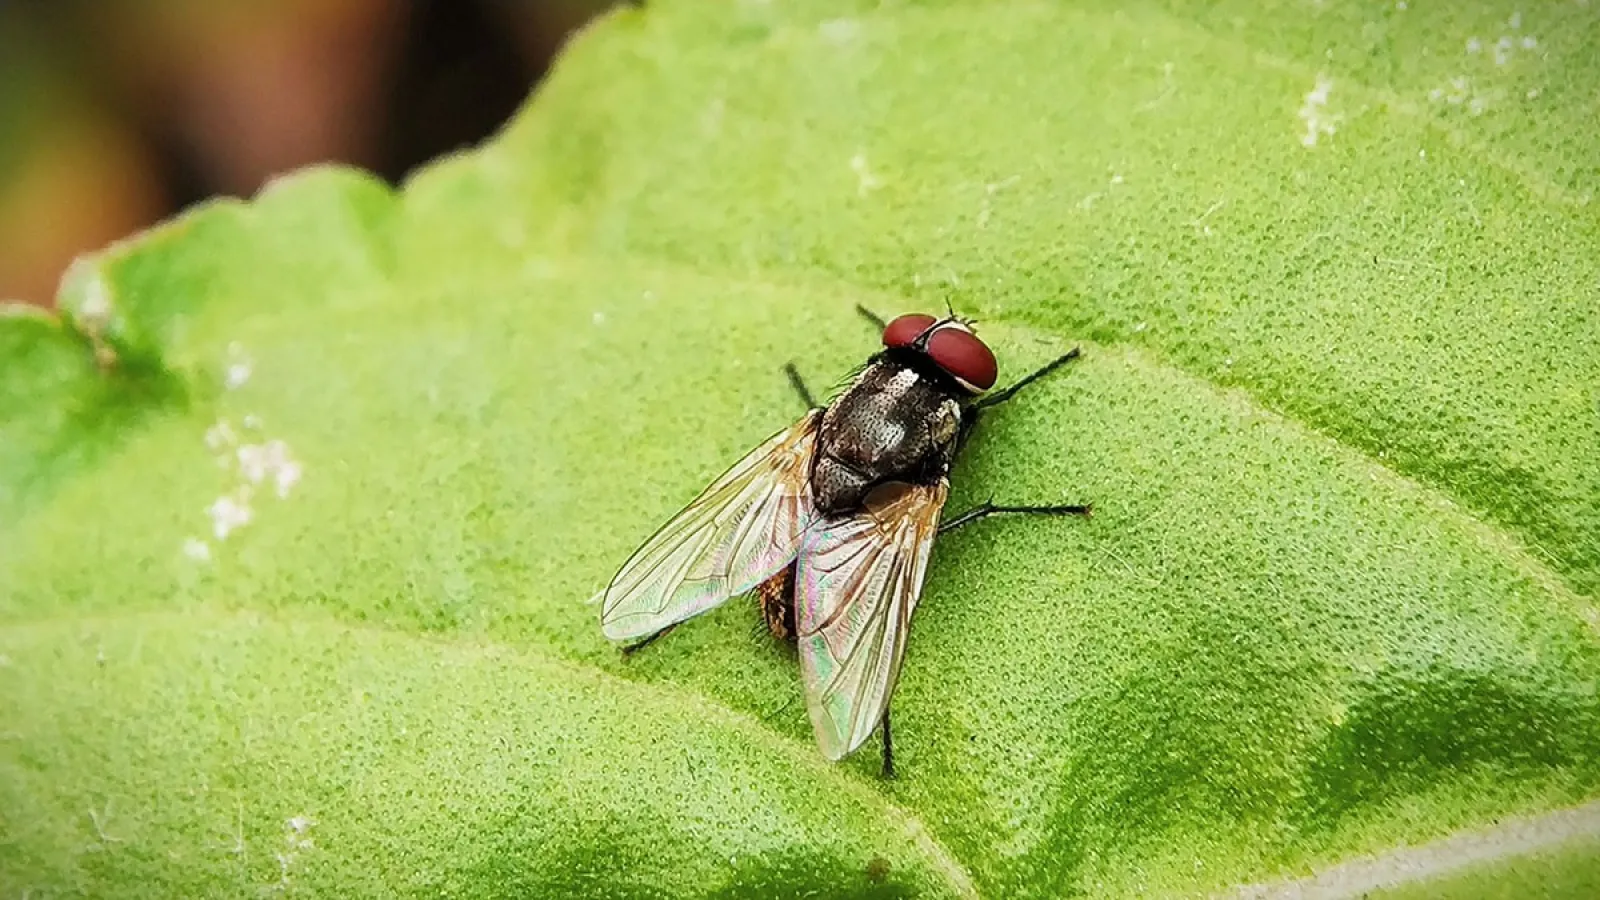 a fly on a leaf